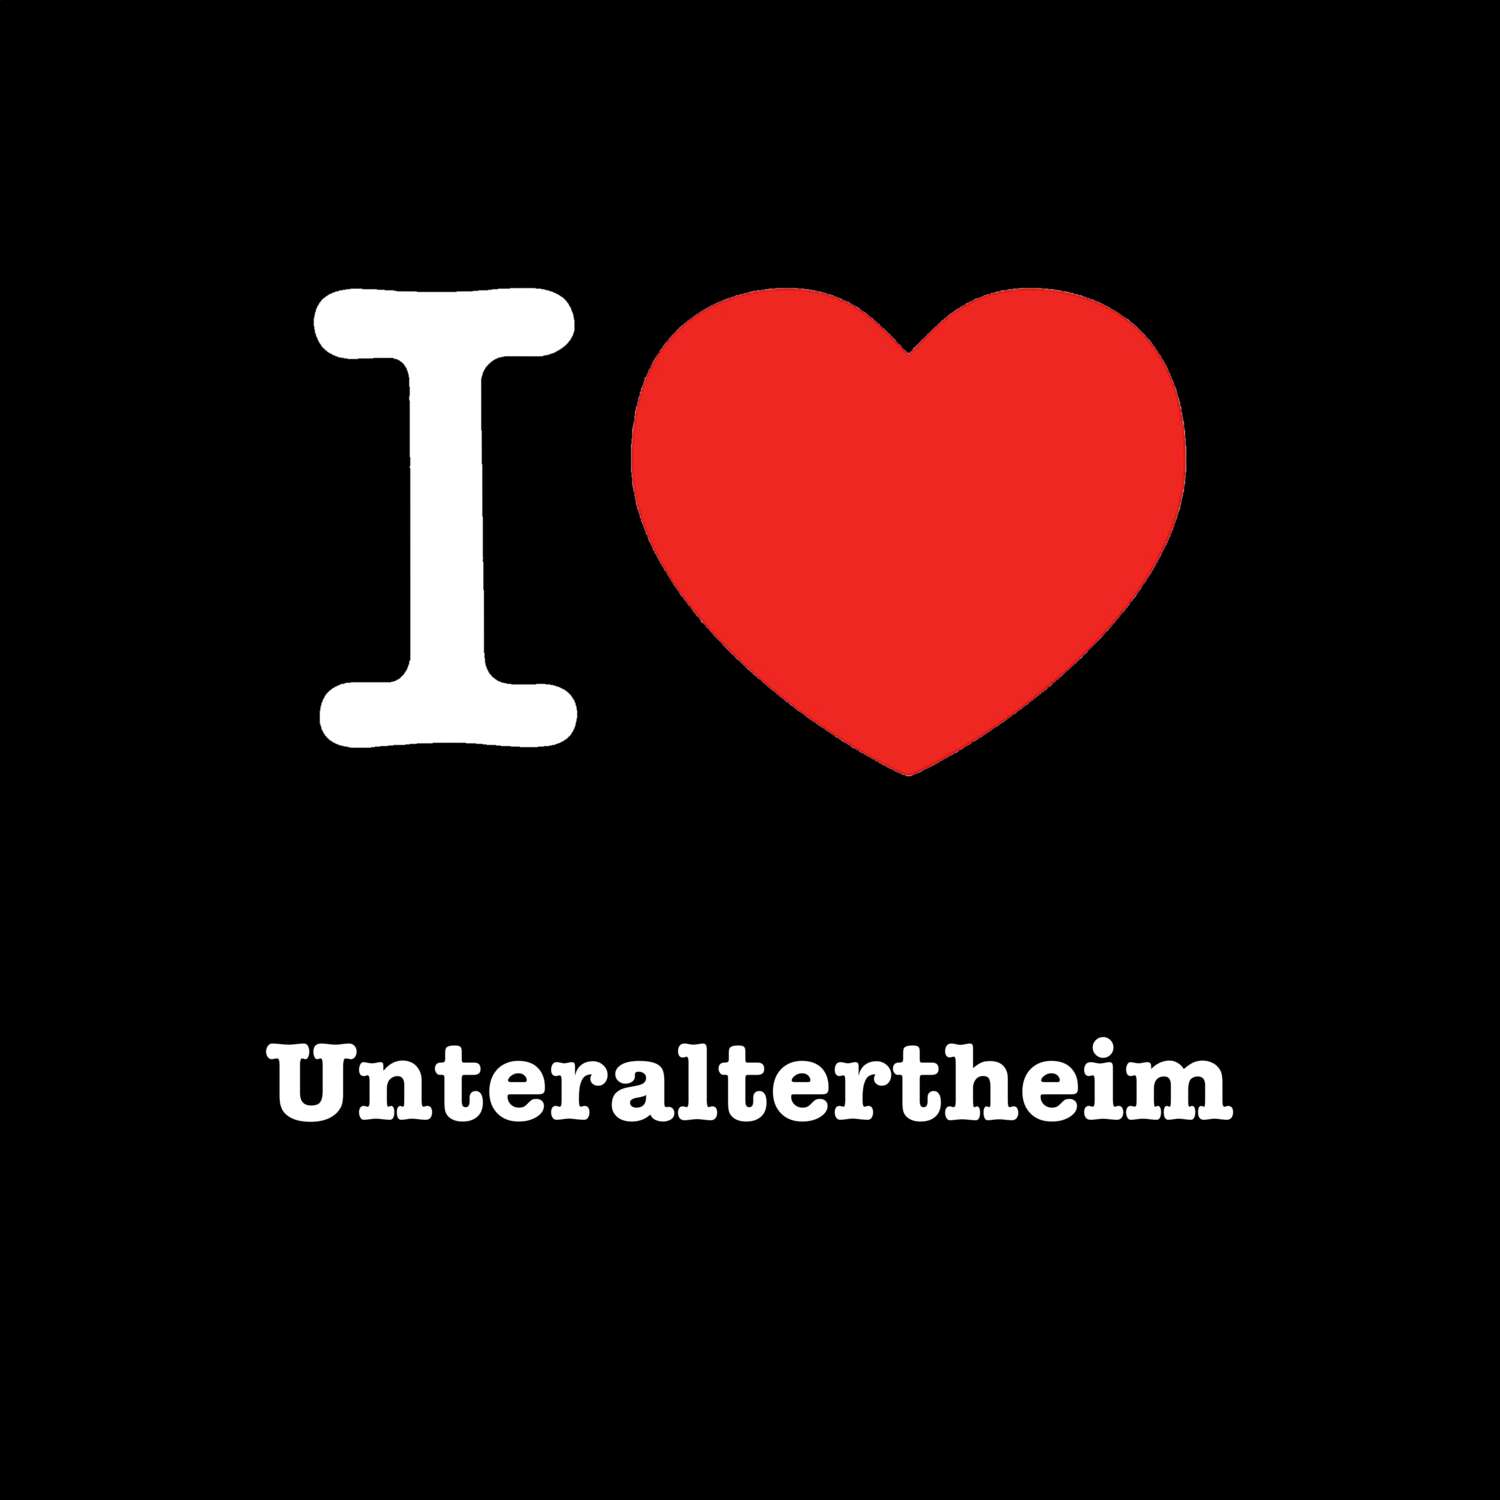 Unteraltertheim T-Shirt »I love«